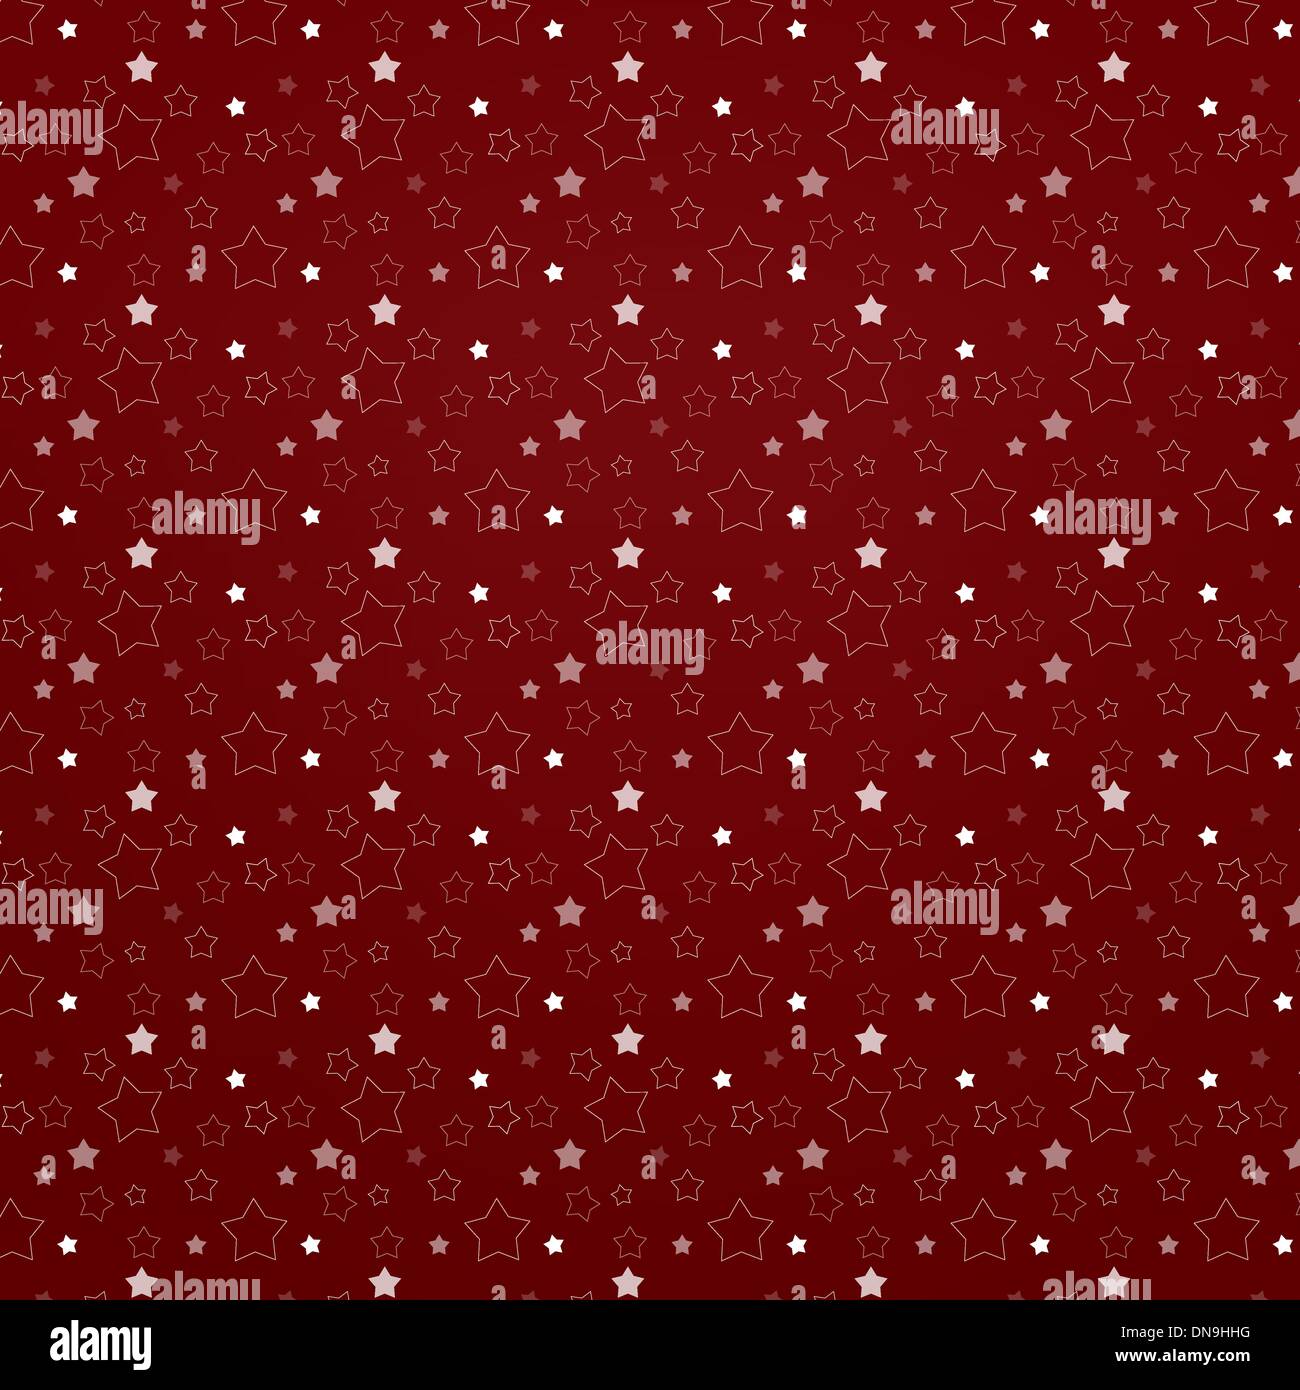 The Christmas stellar background Stock Vector